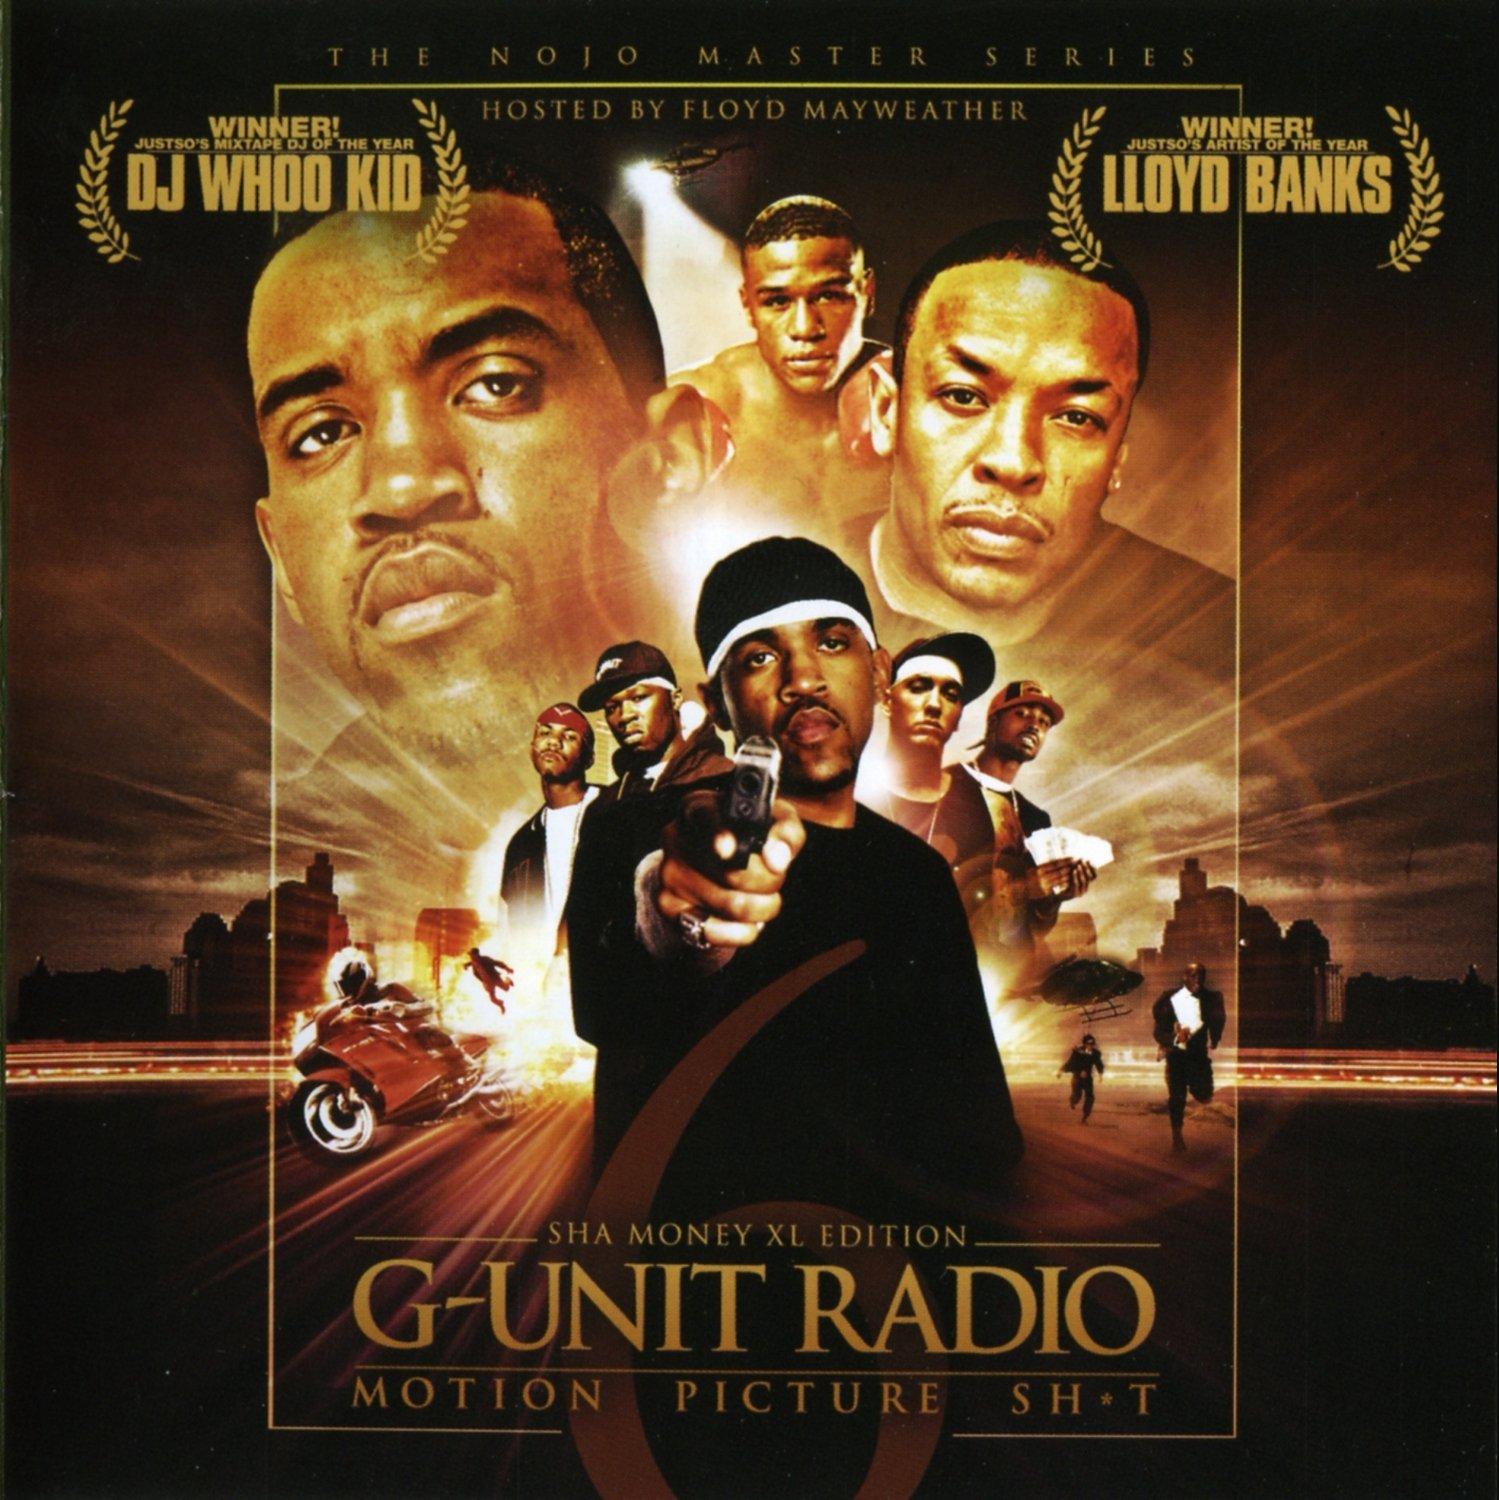 Lloyd Banks & DJ Whoo Kid - G-Unit Radio Part 6: Motion Picture Shit ...